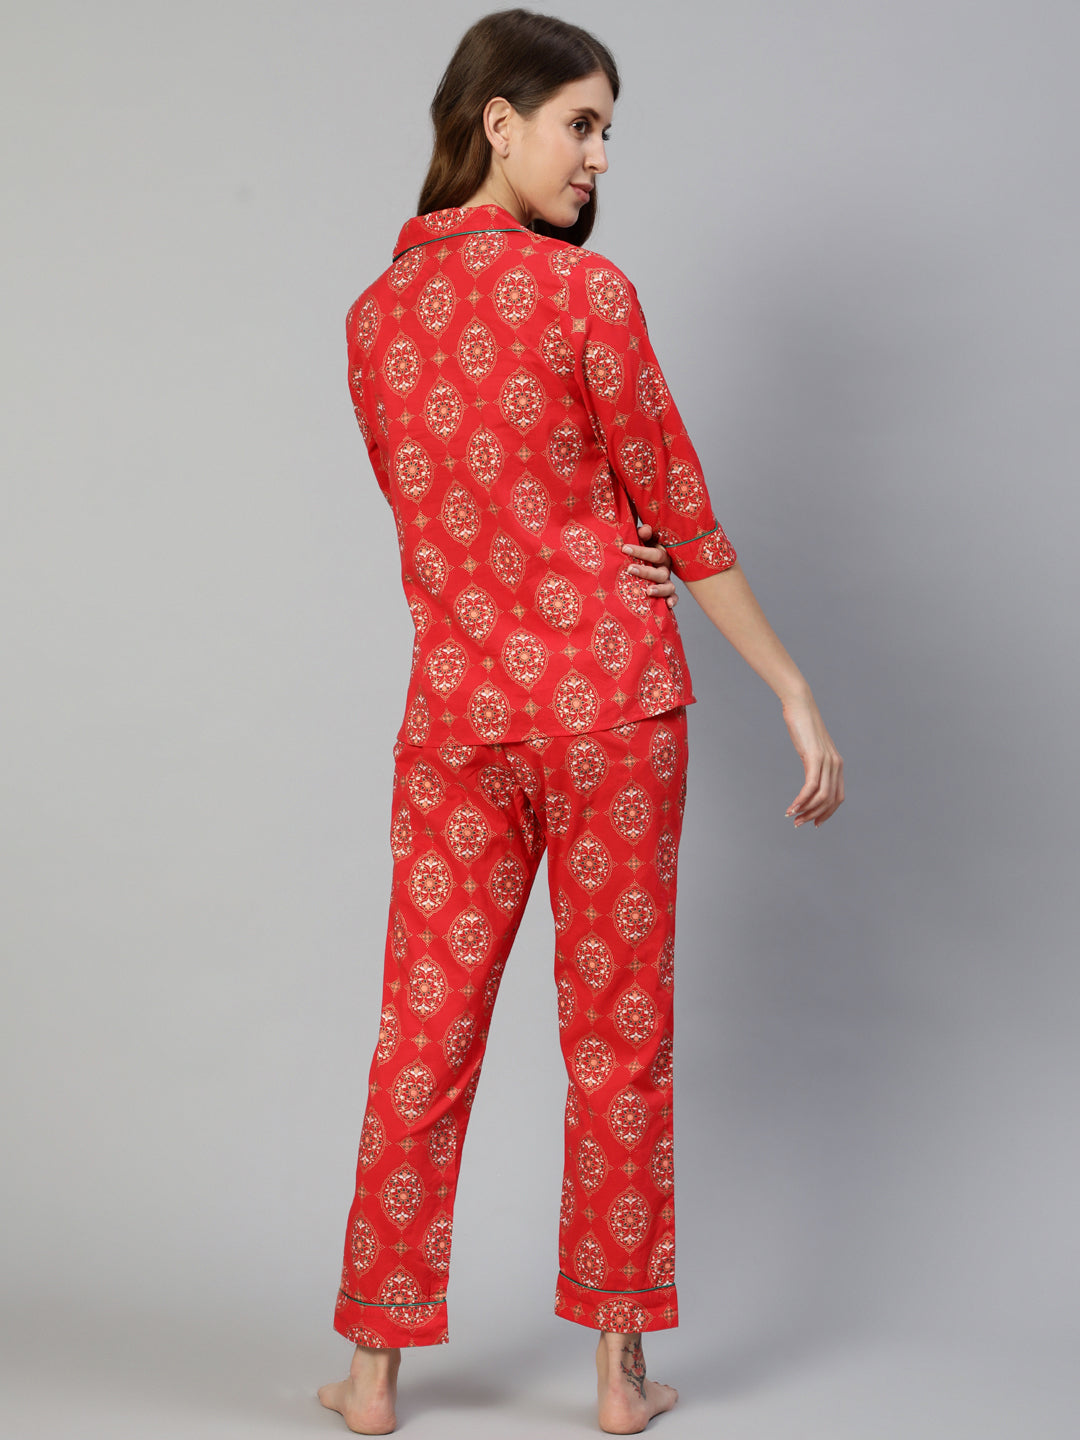 Ishin Women's Cotton Red Printed Night Suit